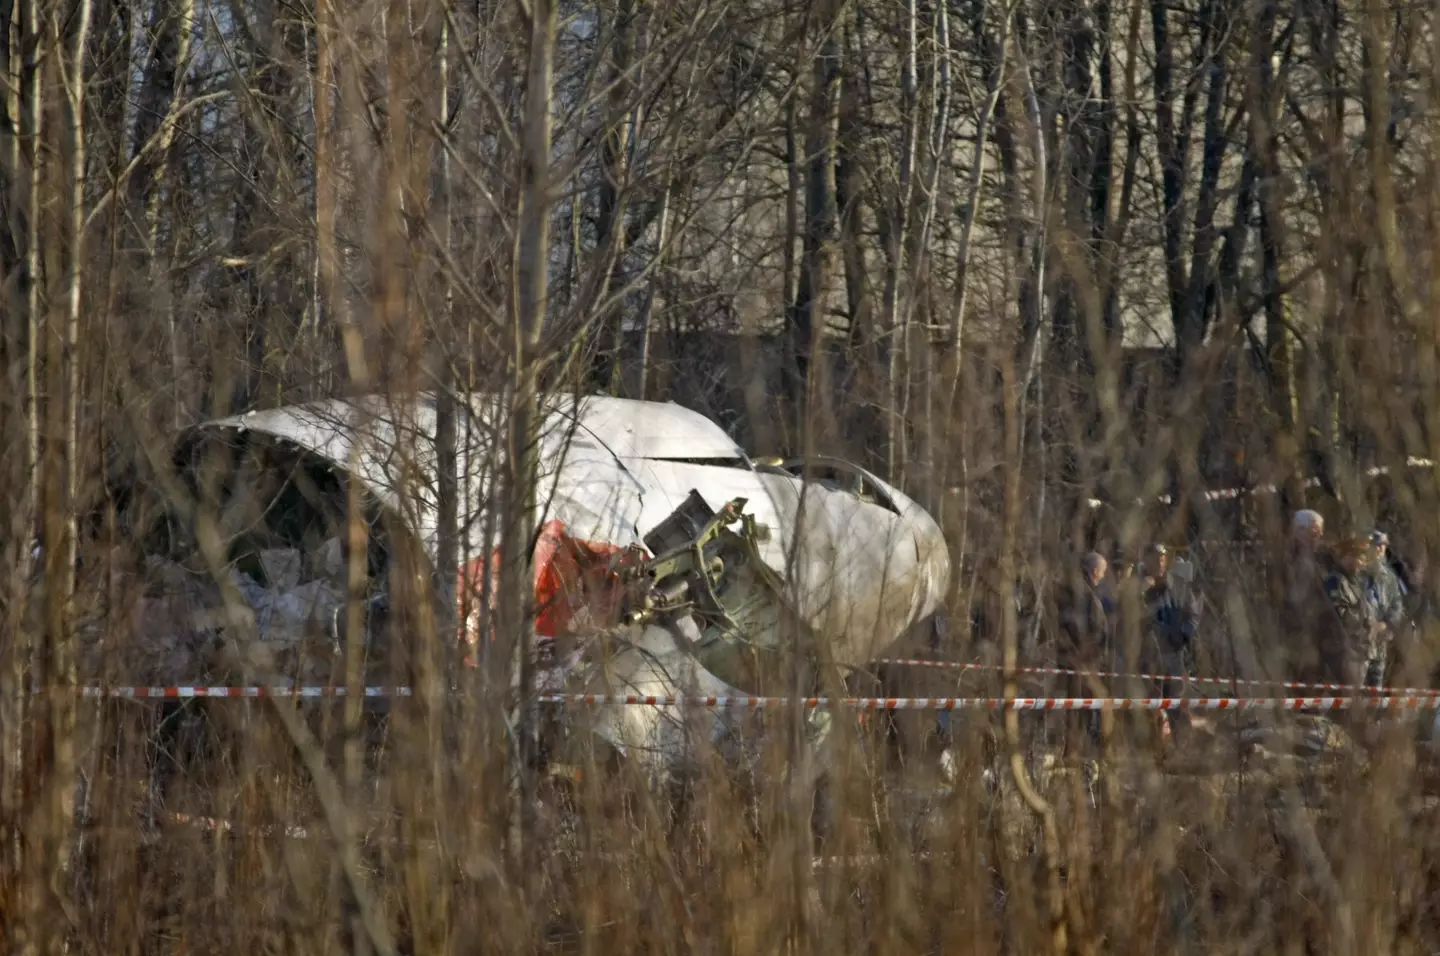 The plane crash in Smolensk killed Poland's president.